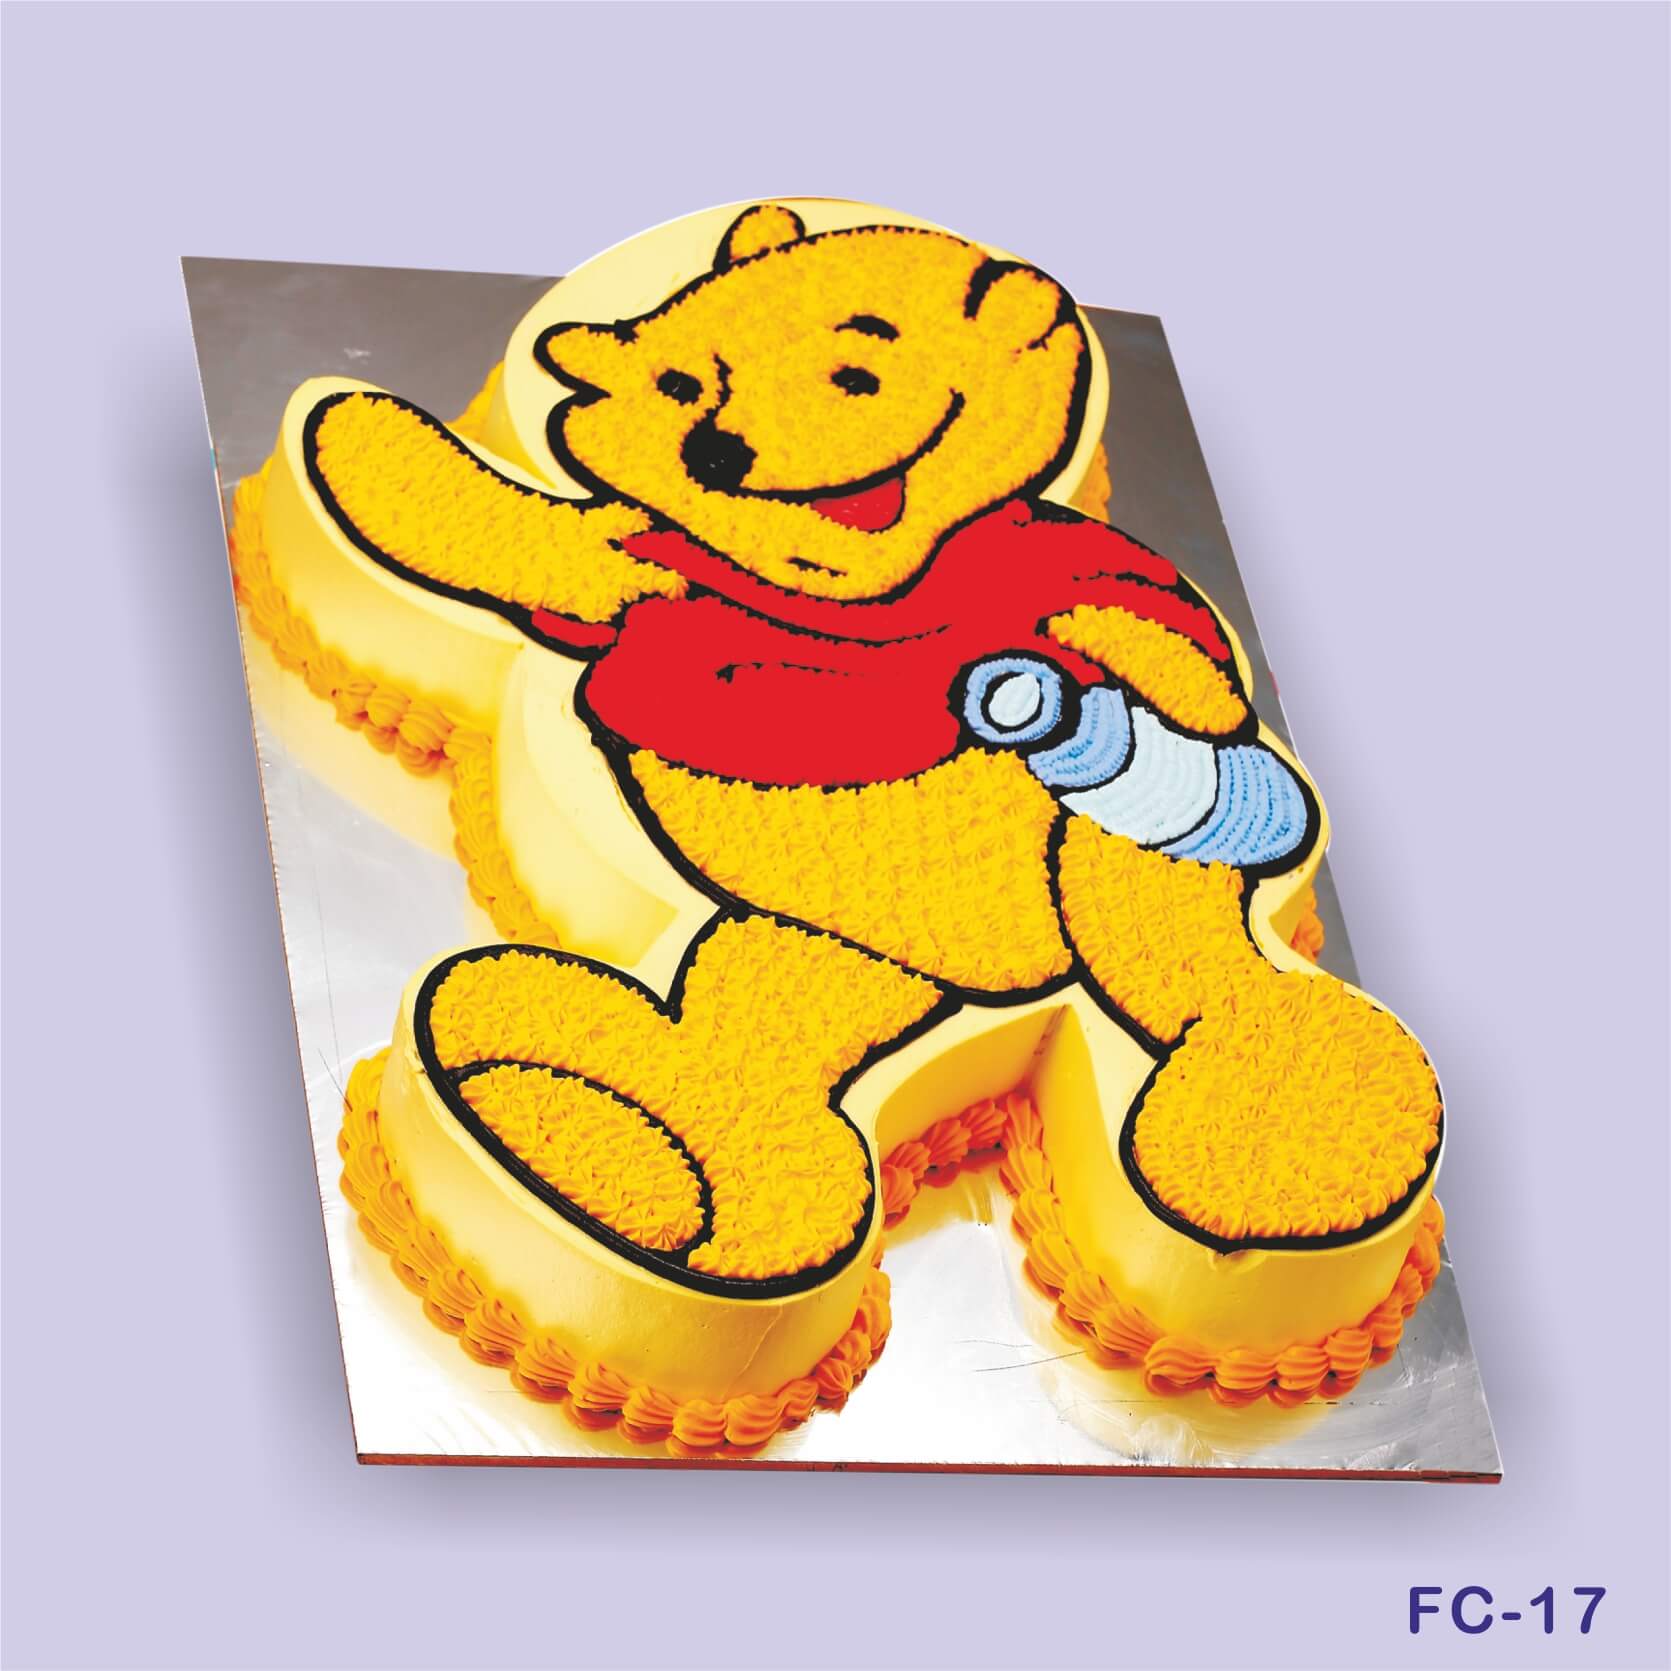 Vintage Winnie The Pooh Birthday Cake - CakeCentral.com